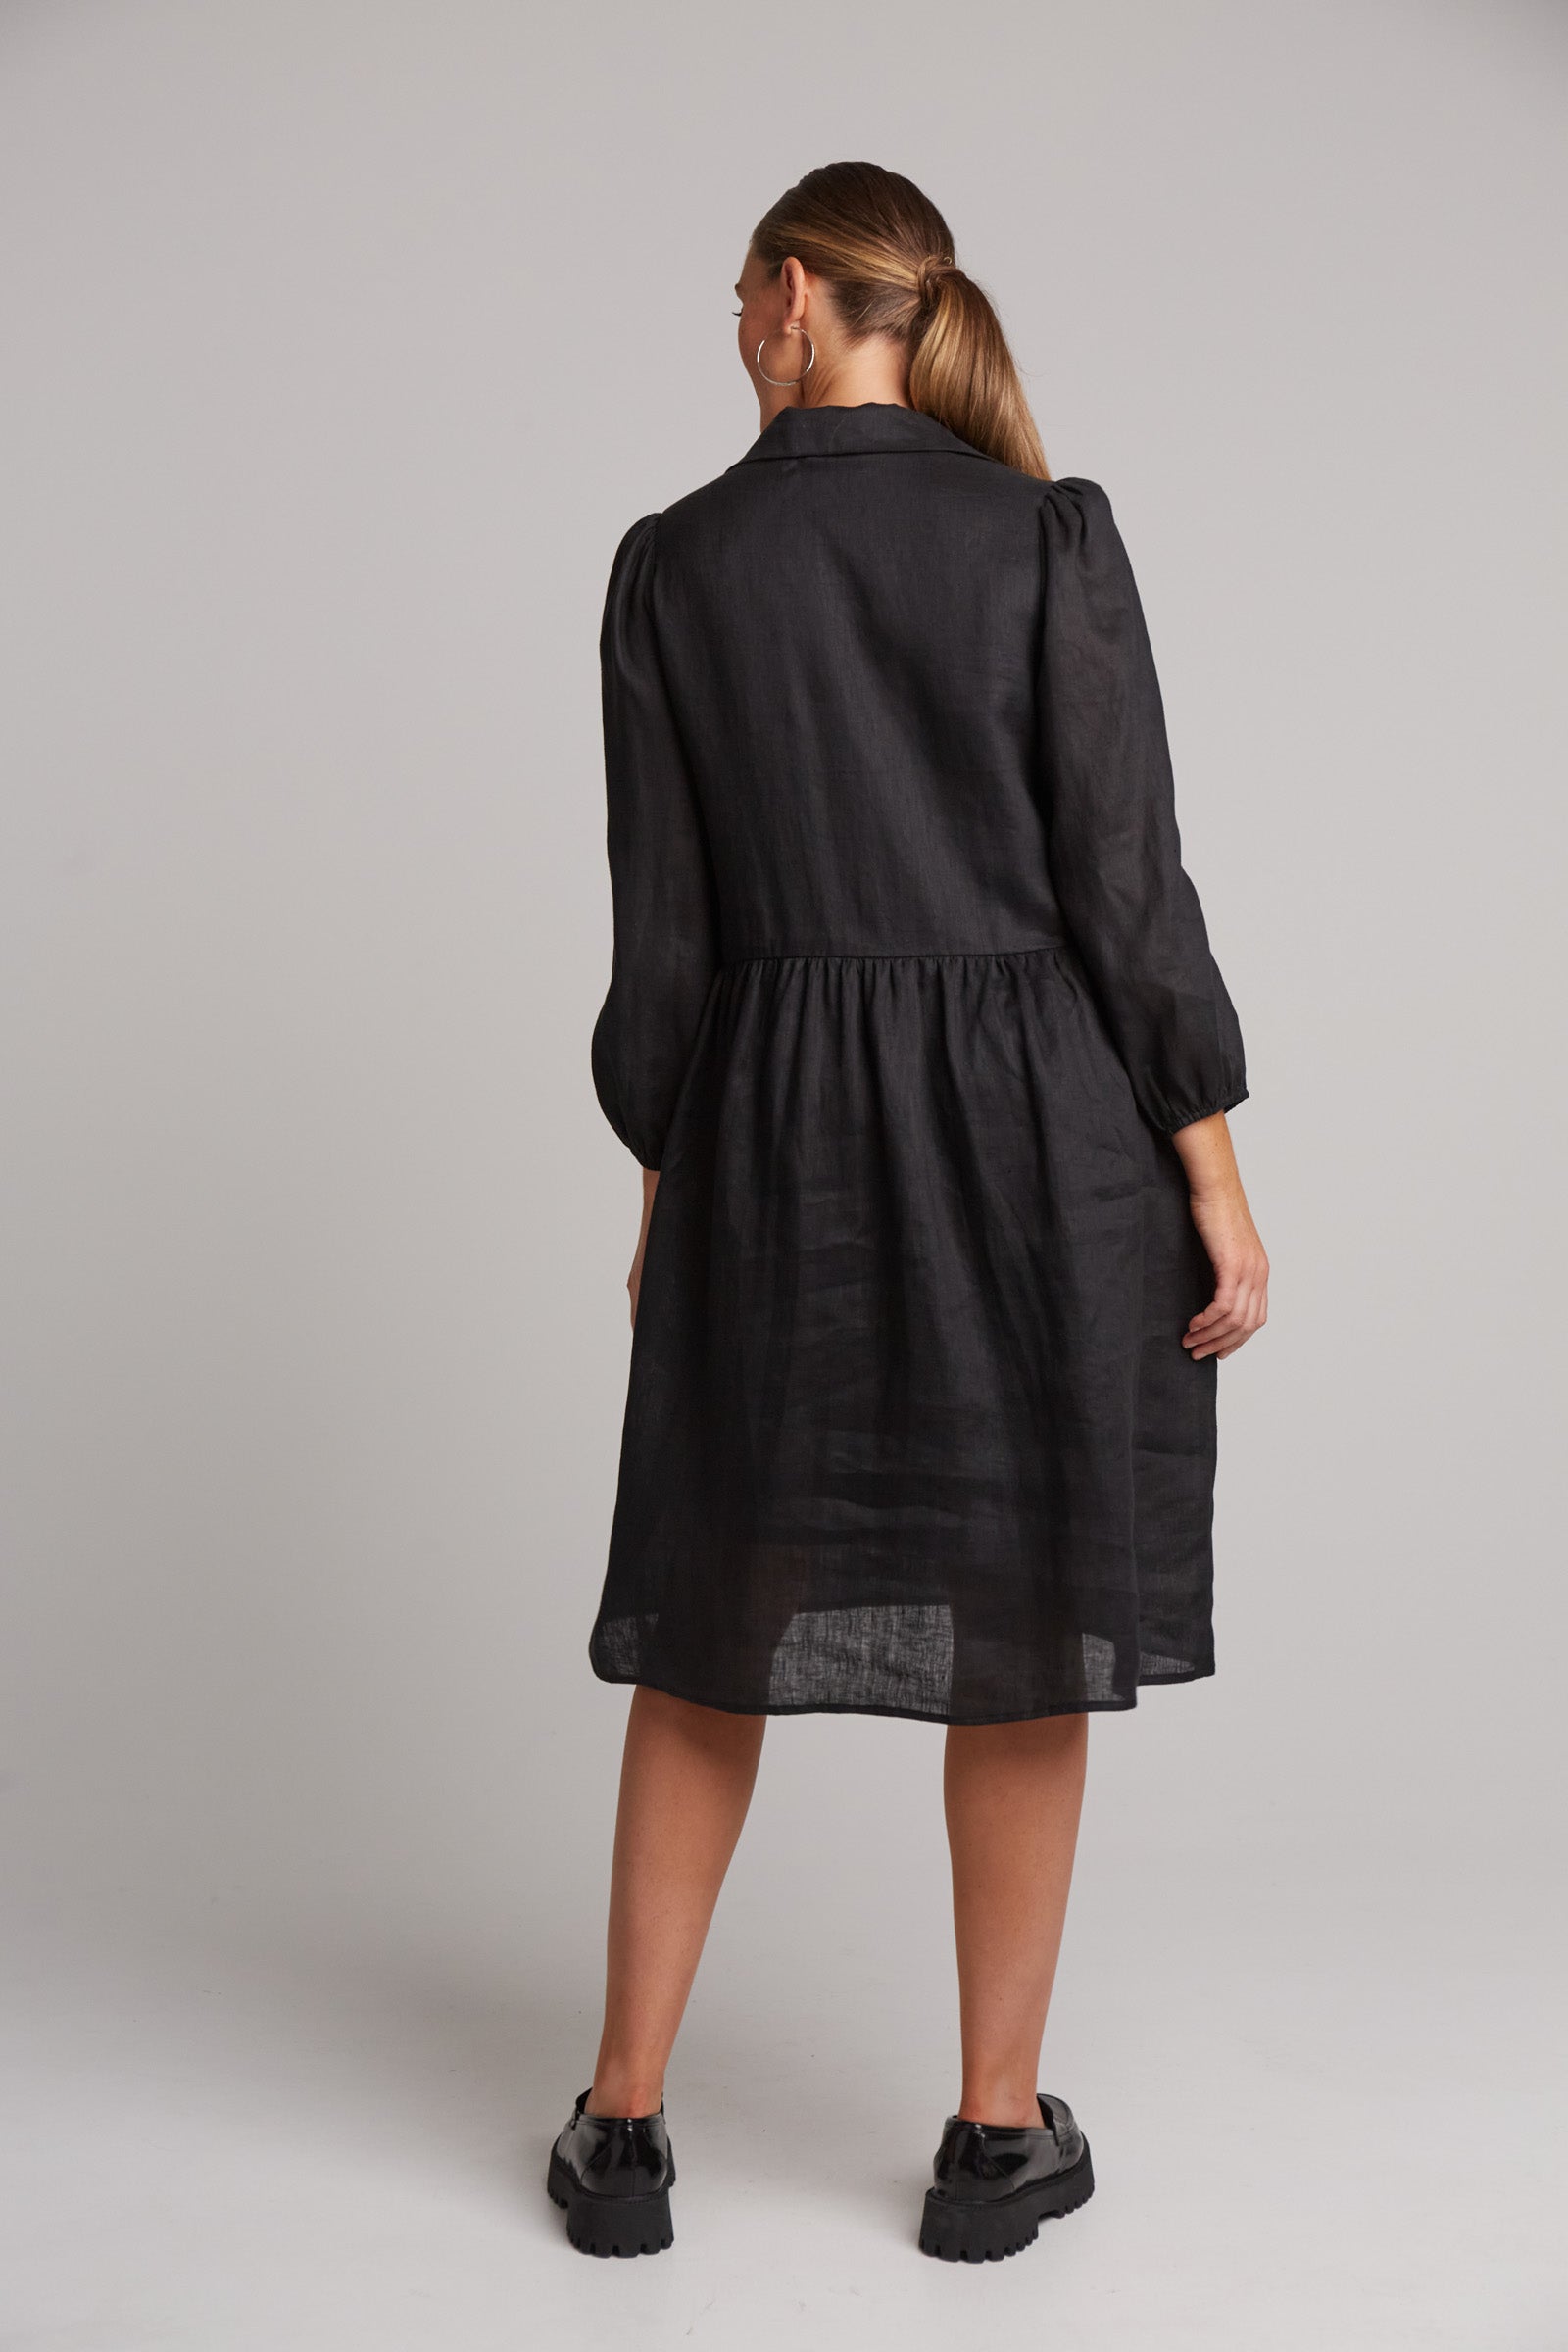 Studio Midi Shirt Dress - Ebony - eb&ive Clothing - Dress Mid Linen